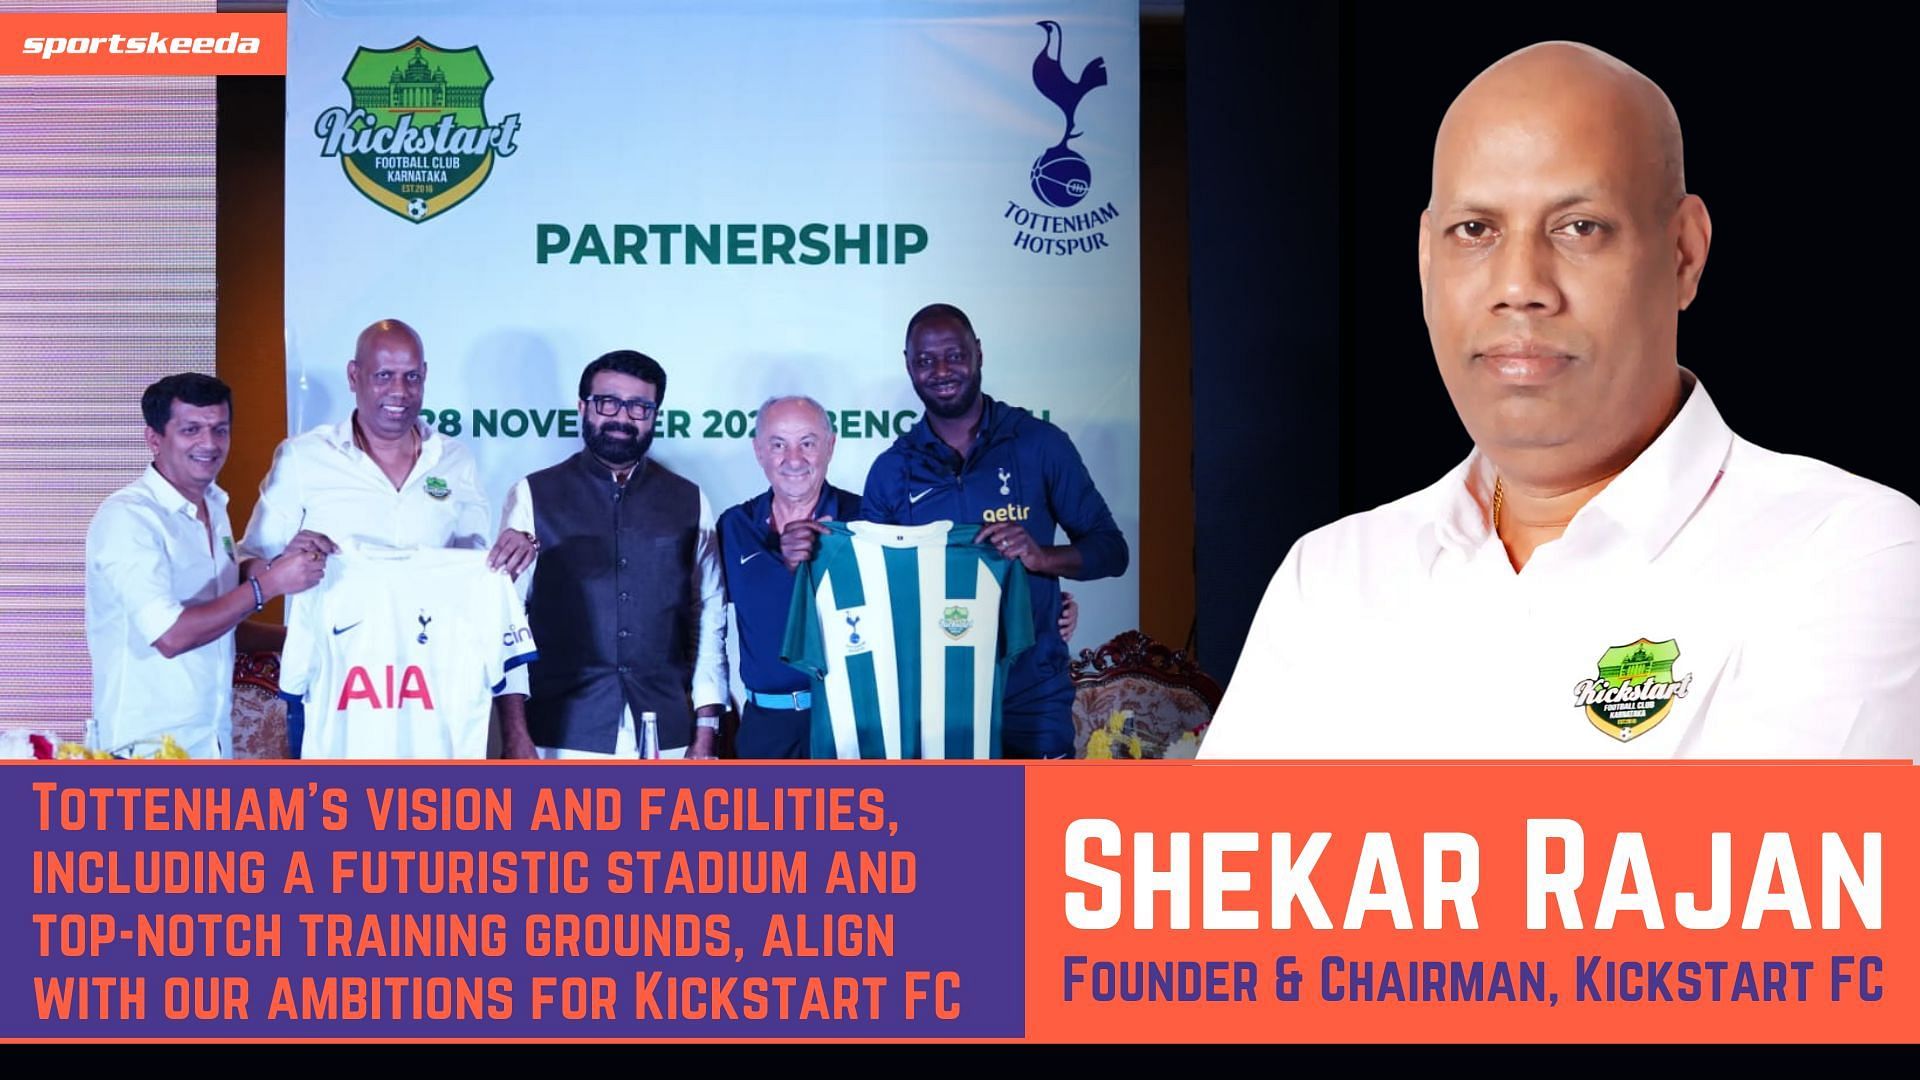  Shekar Rajan, Founder &amp; Chairman, Kickstart FC ( Image via Sportskeeda)